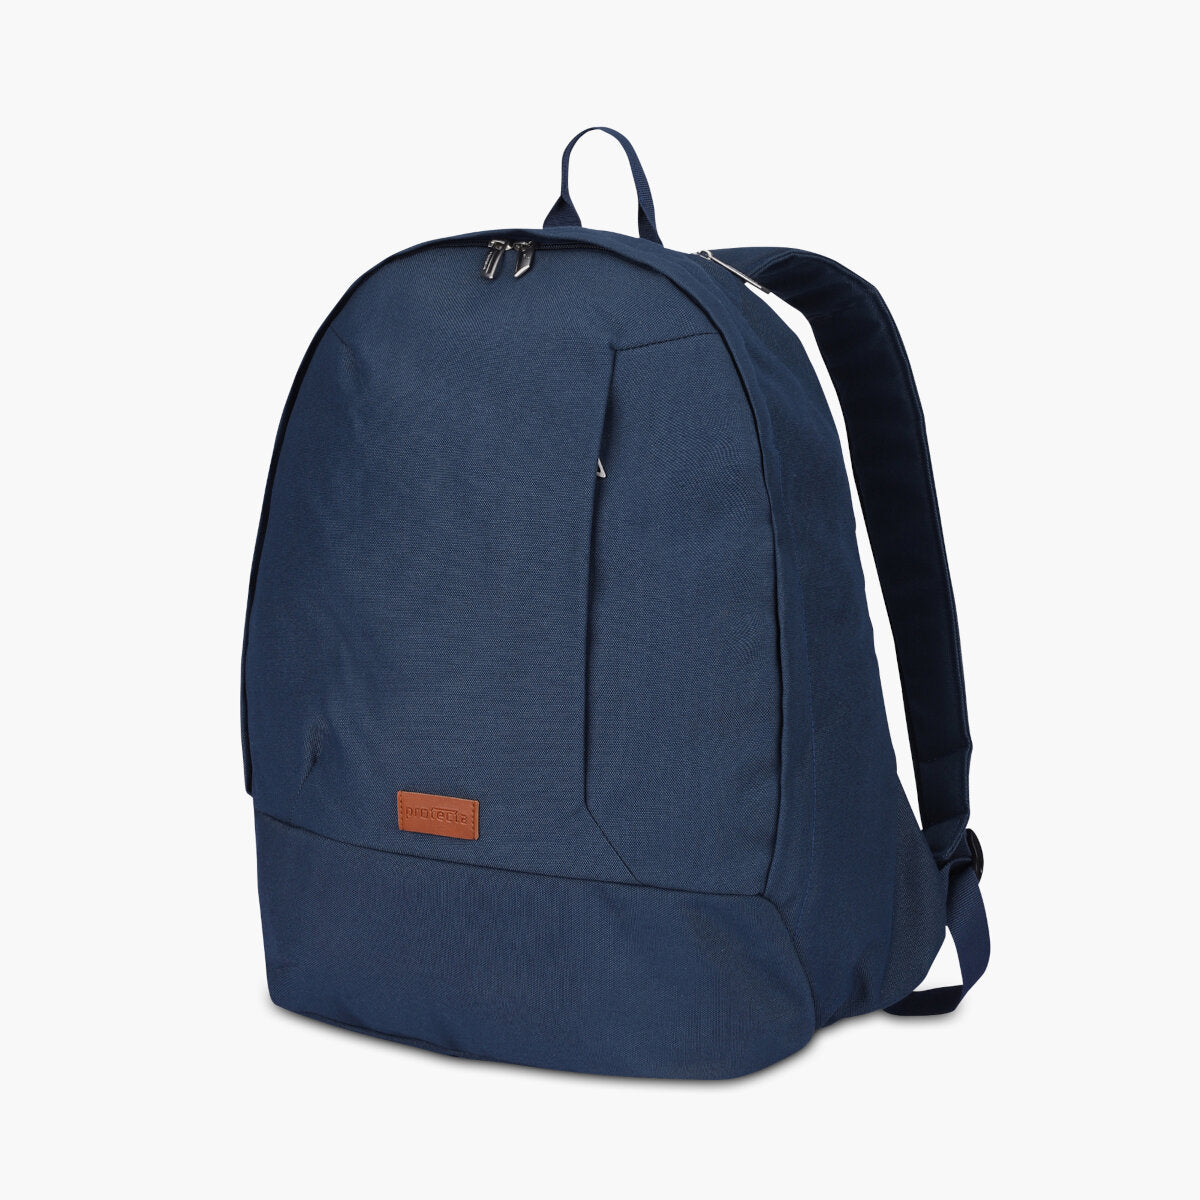 Blue | Protecta Steady Progress Laptop Backpack - 2